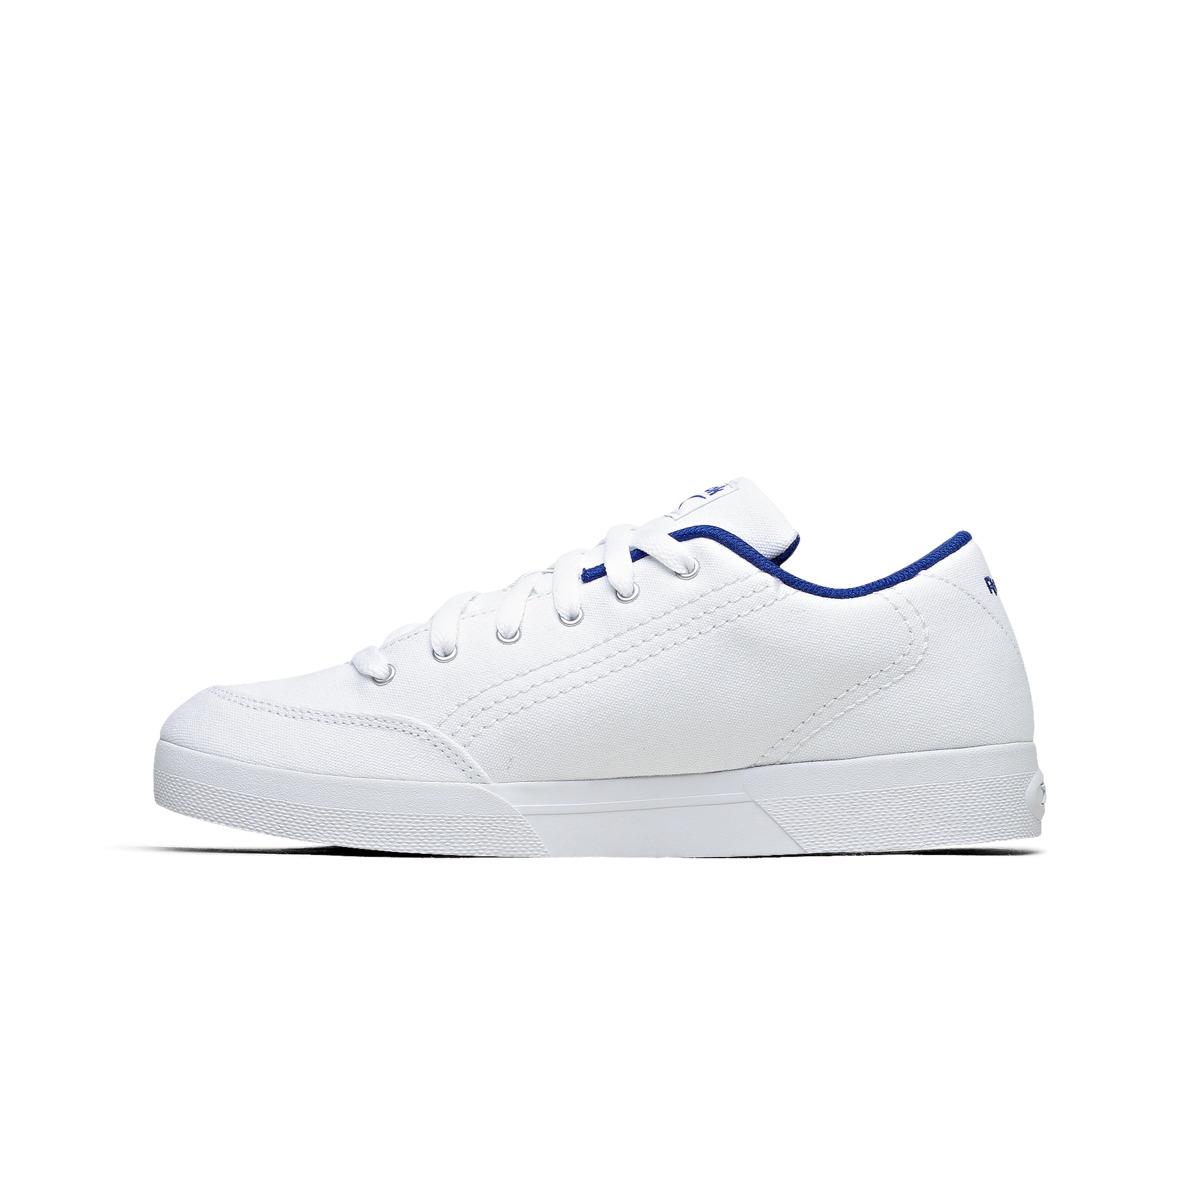 Reebok Slice Cvs DV5566 Unisex White Blue Athletic Tennis Shoes Size 11.5 RBK152